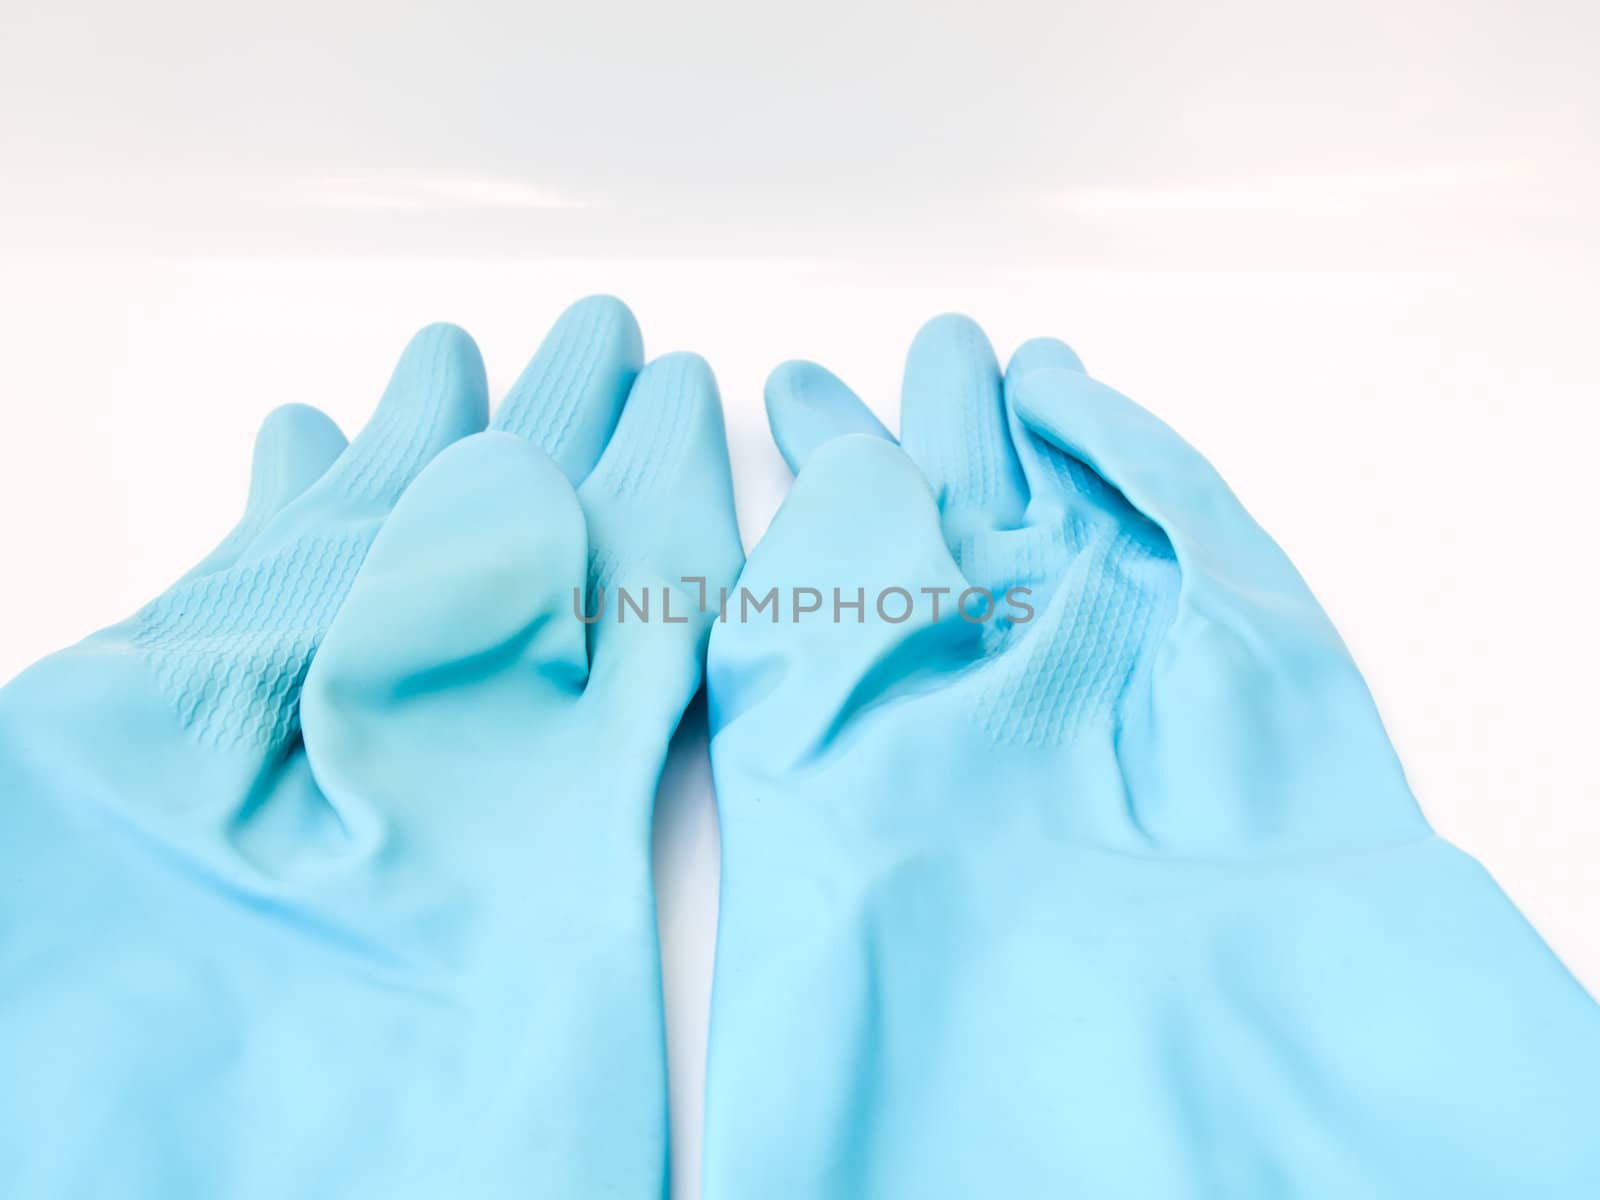 Two light blue rubber gloves